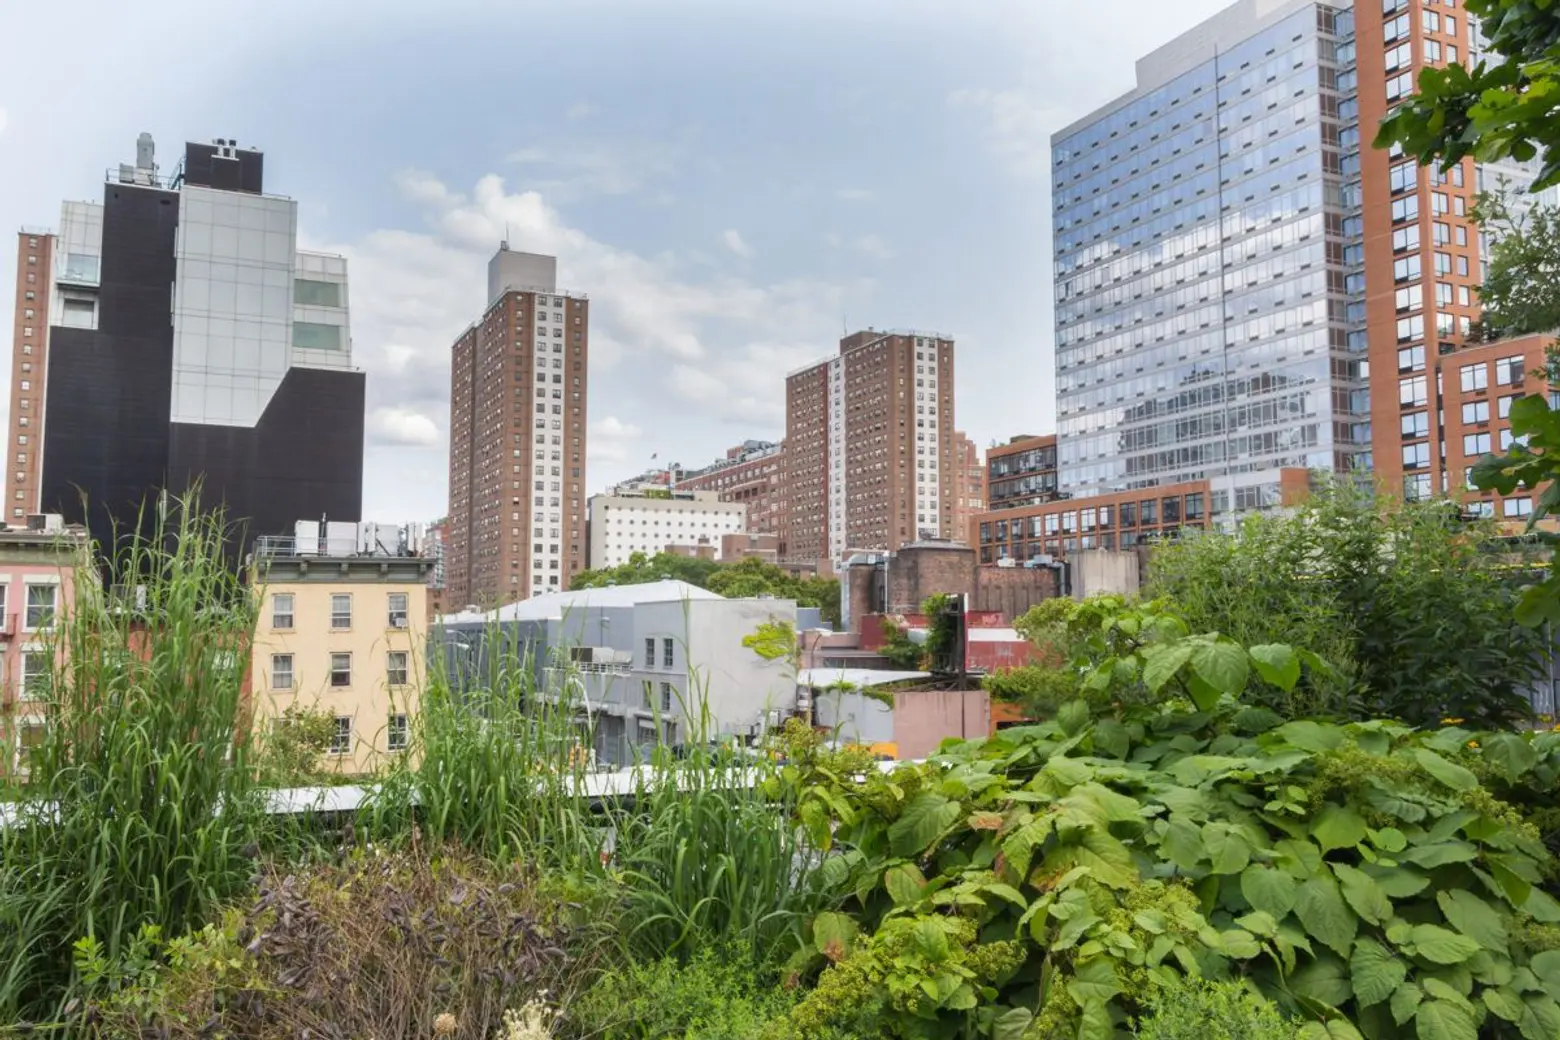 NYC establishes a digital hub for urban agriculture